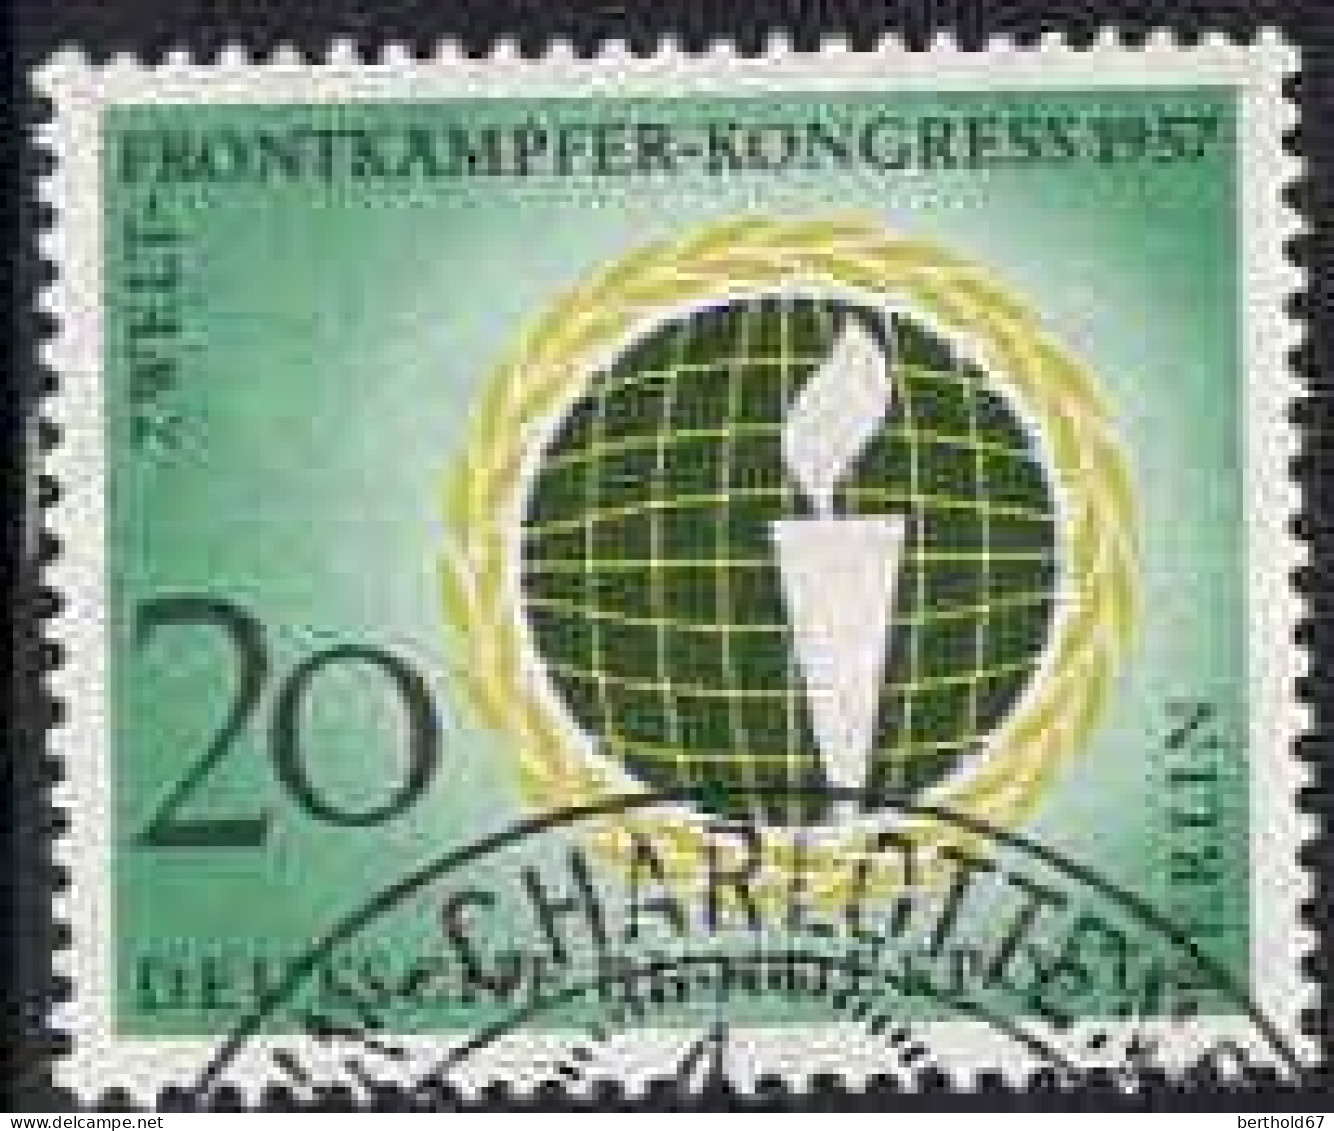 Berlin Poste Obl Yv:157 Mi:177 Welt-Frontkämpfer-Kongress (TB Cachet Rond) - Used Stamps